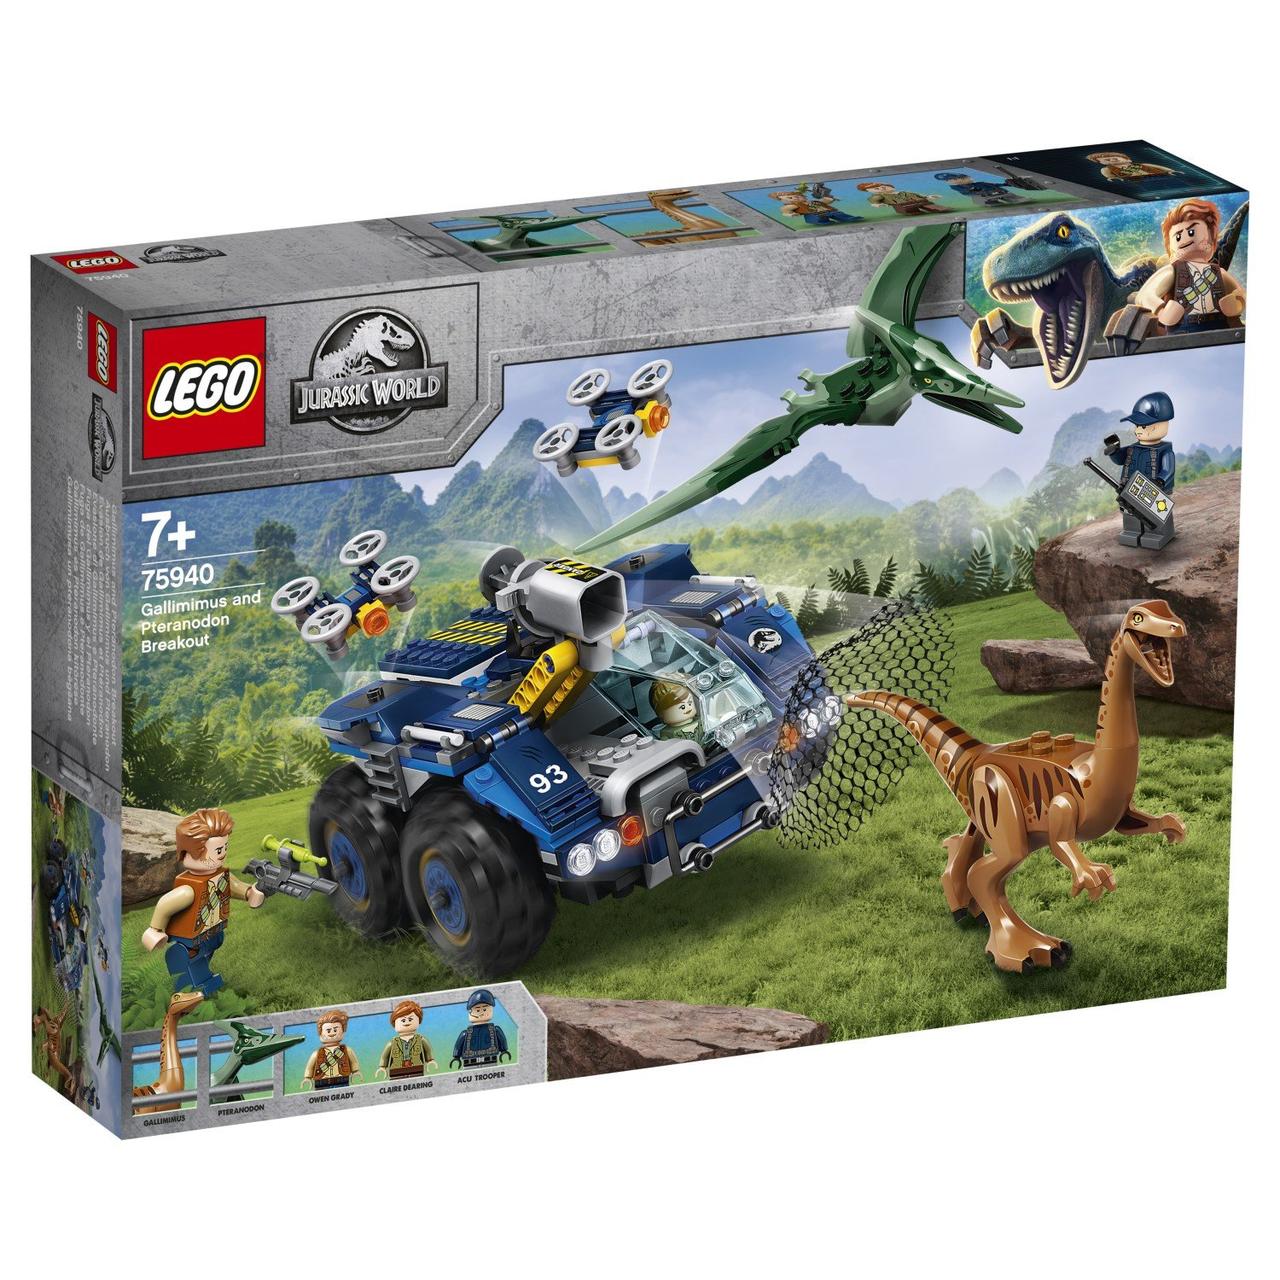 75940 Lego Jurassic World Побег галлимима и птеранодона, Лего Мир Юрского периода